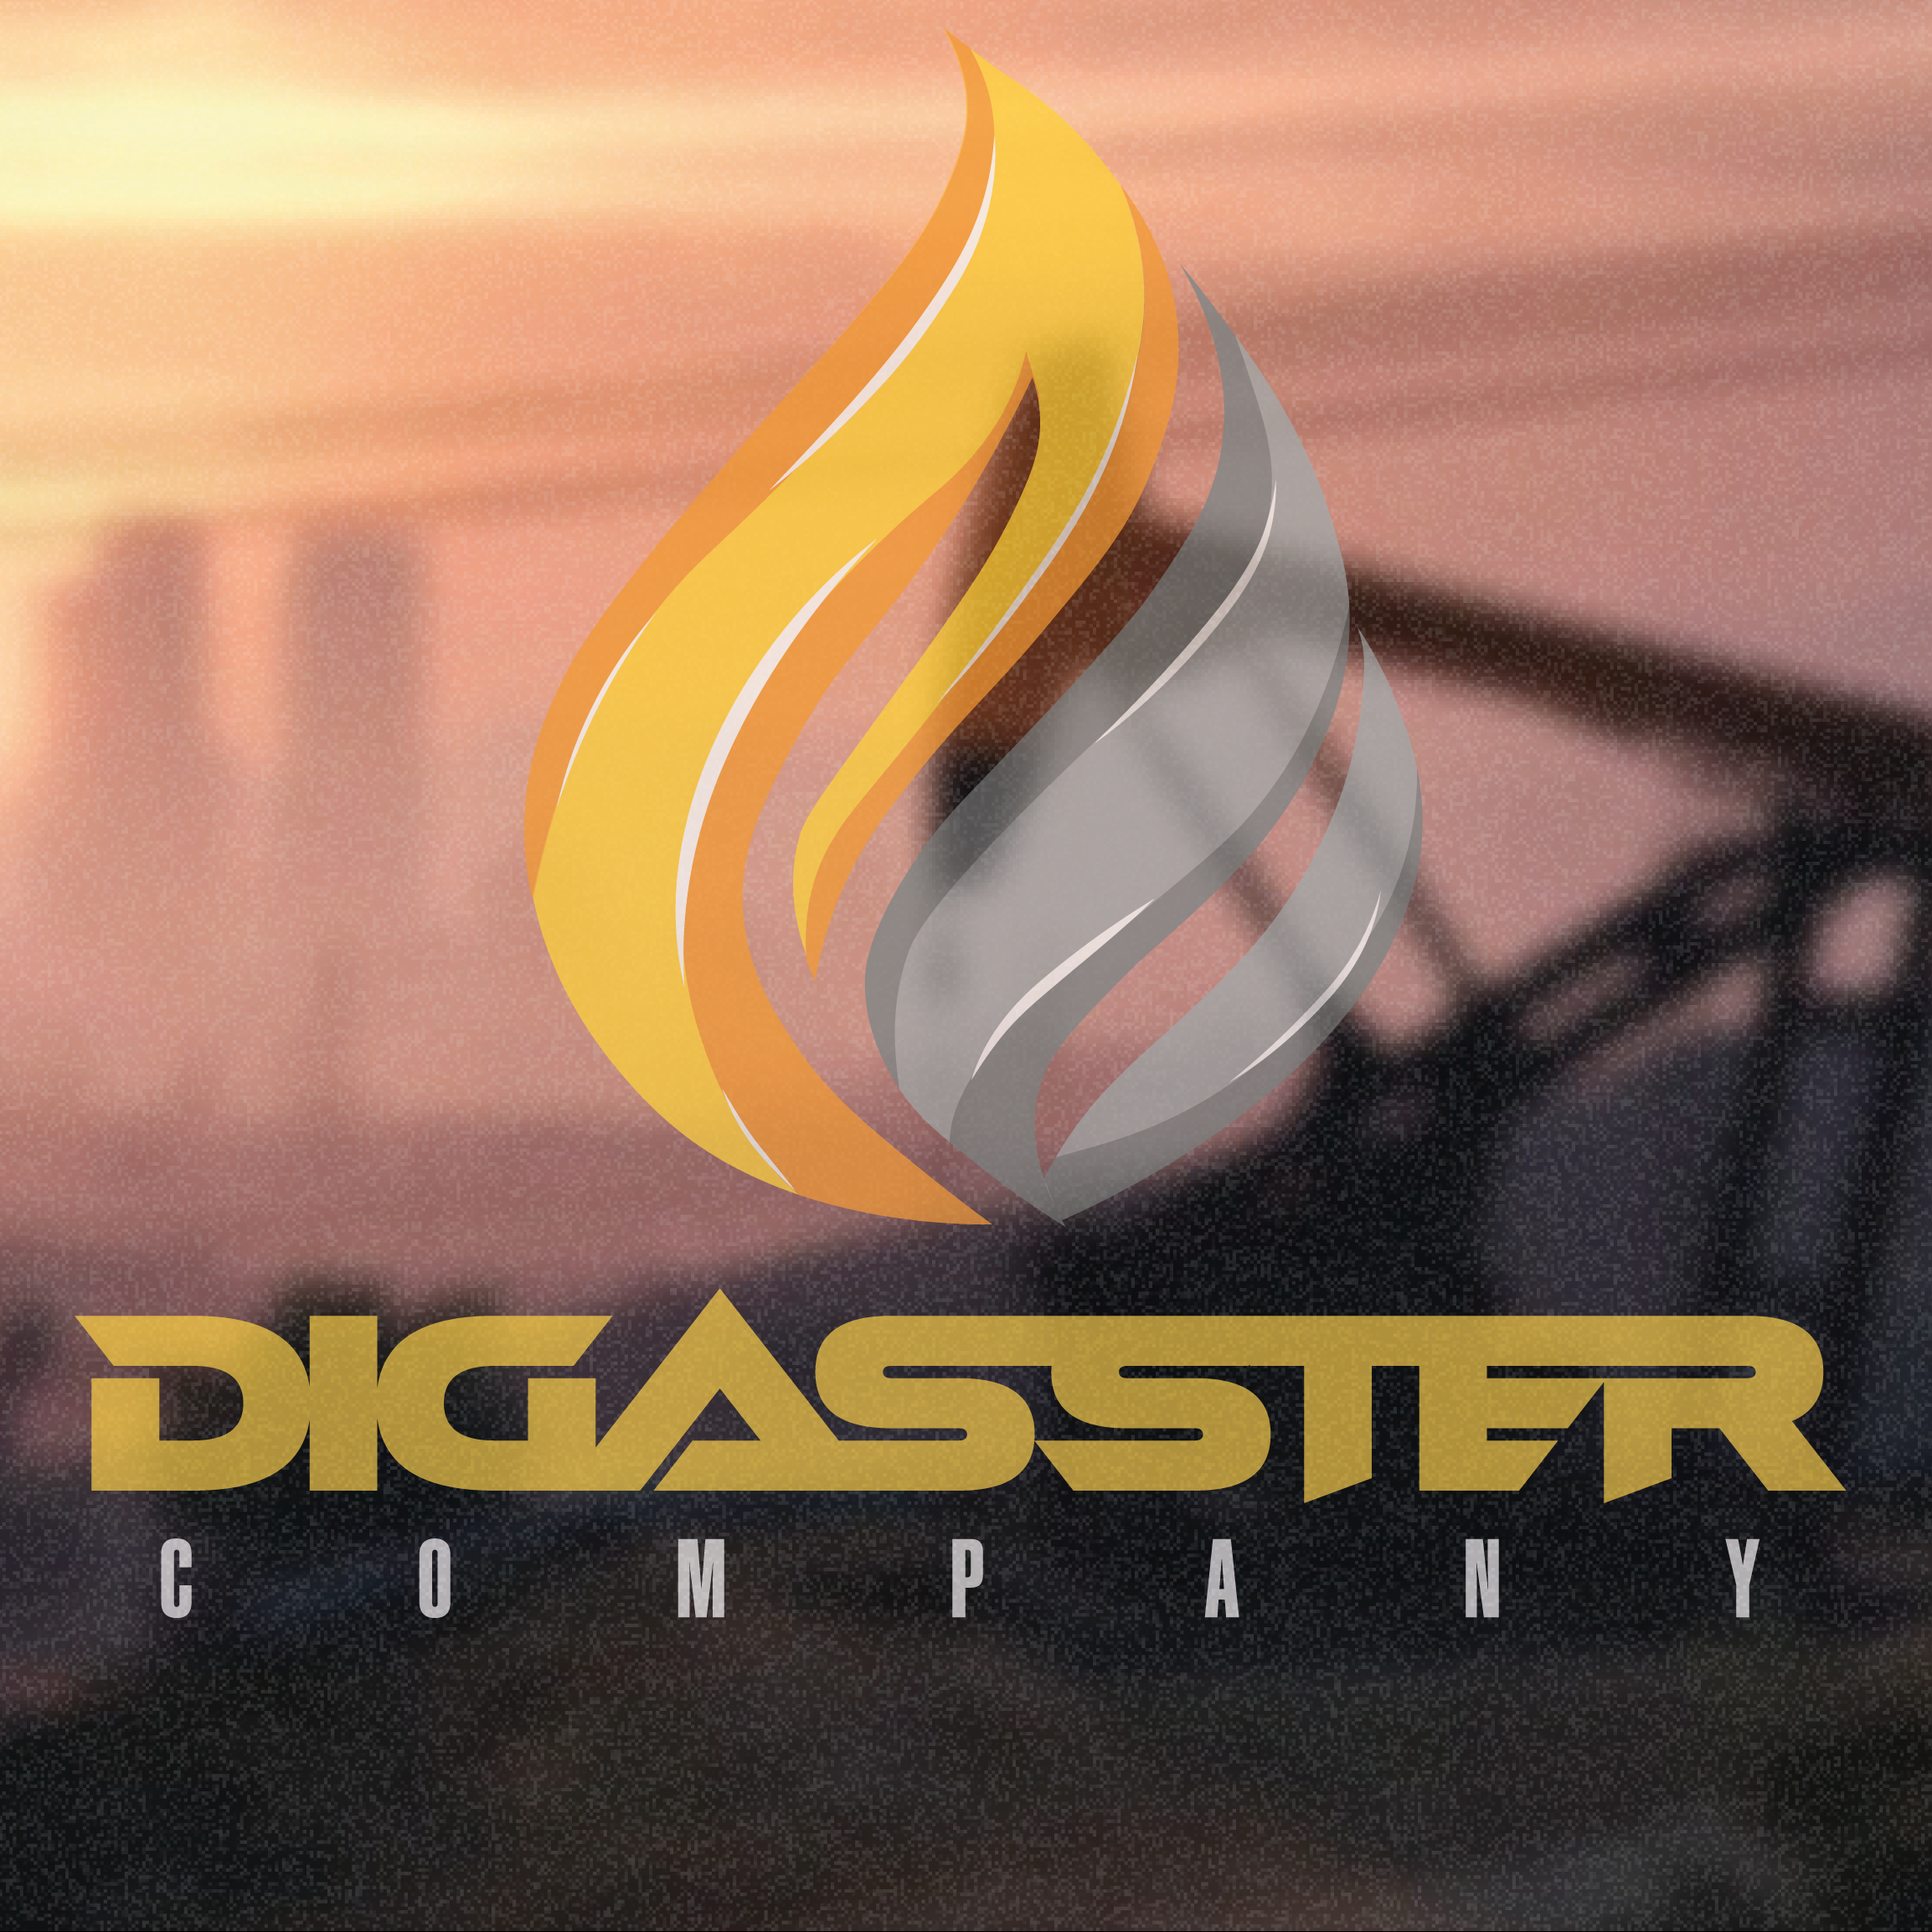 Digasster Company